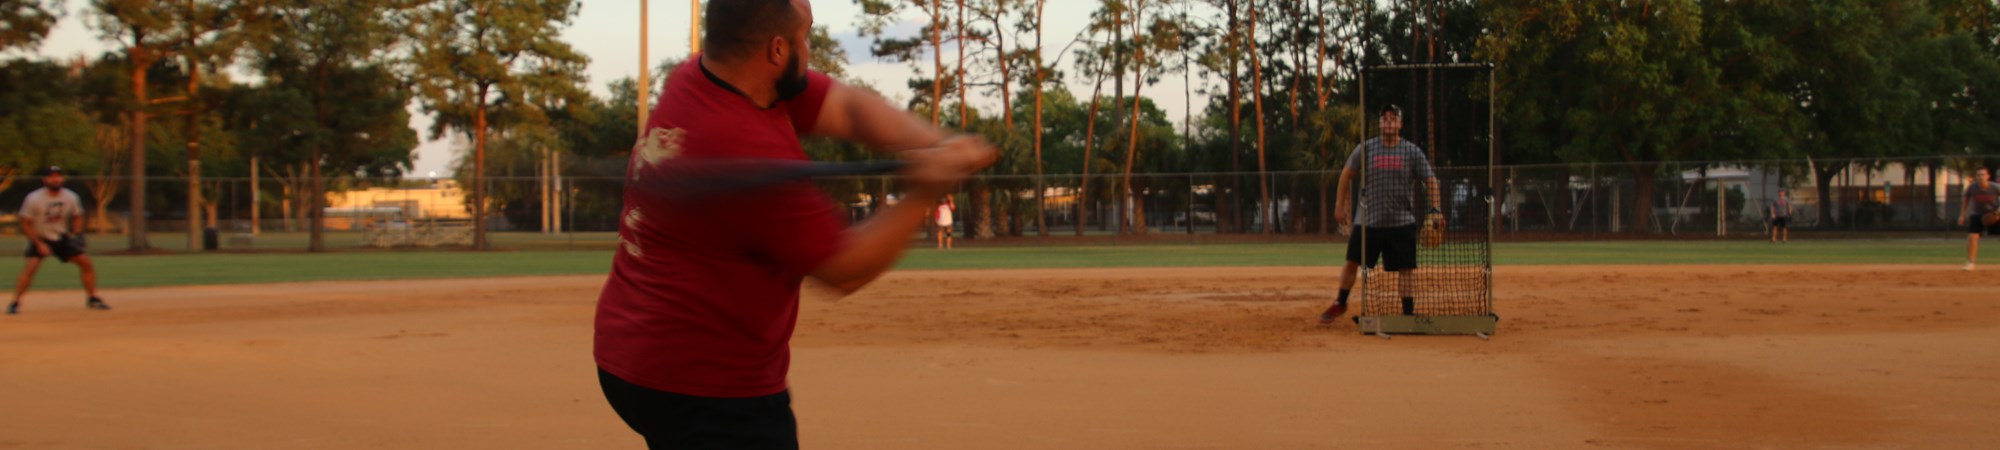 Softball field at Sunset, man in the foreground swinging a baseball bat